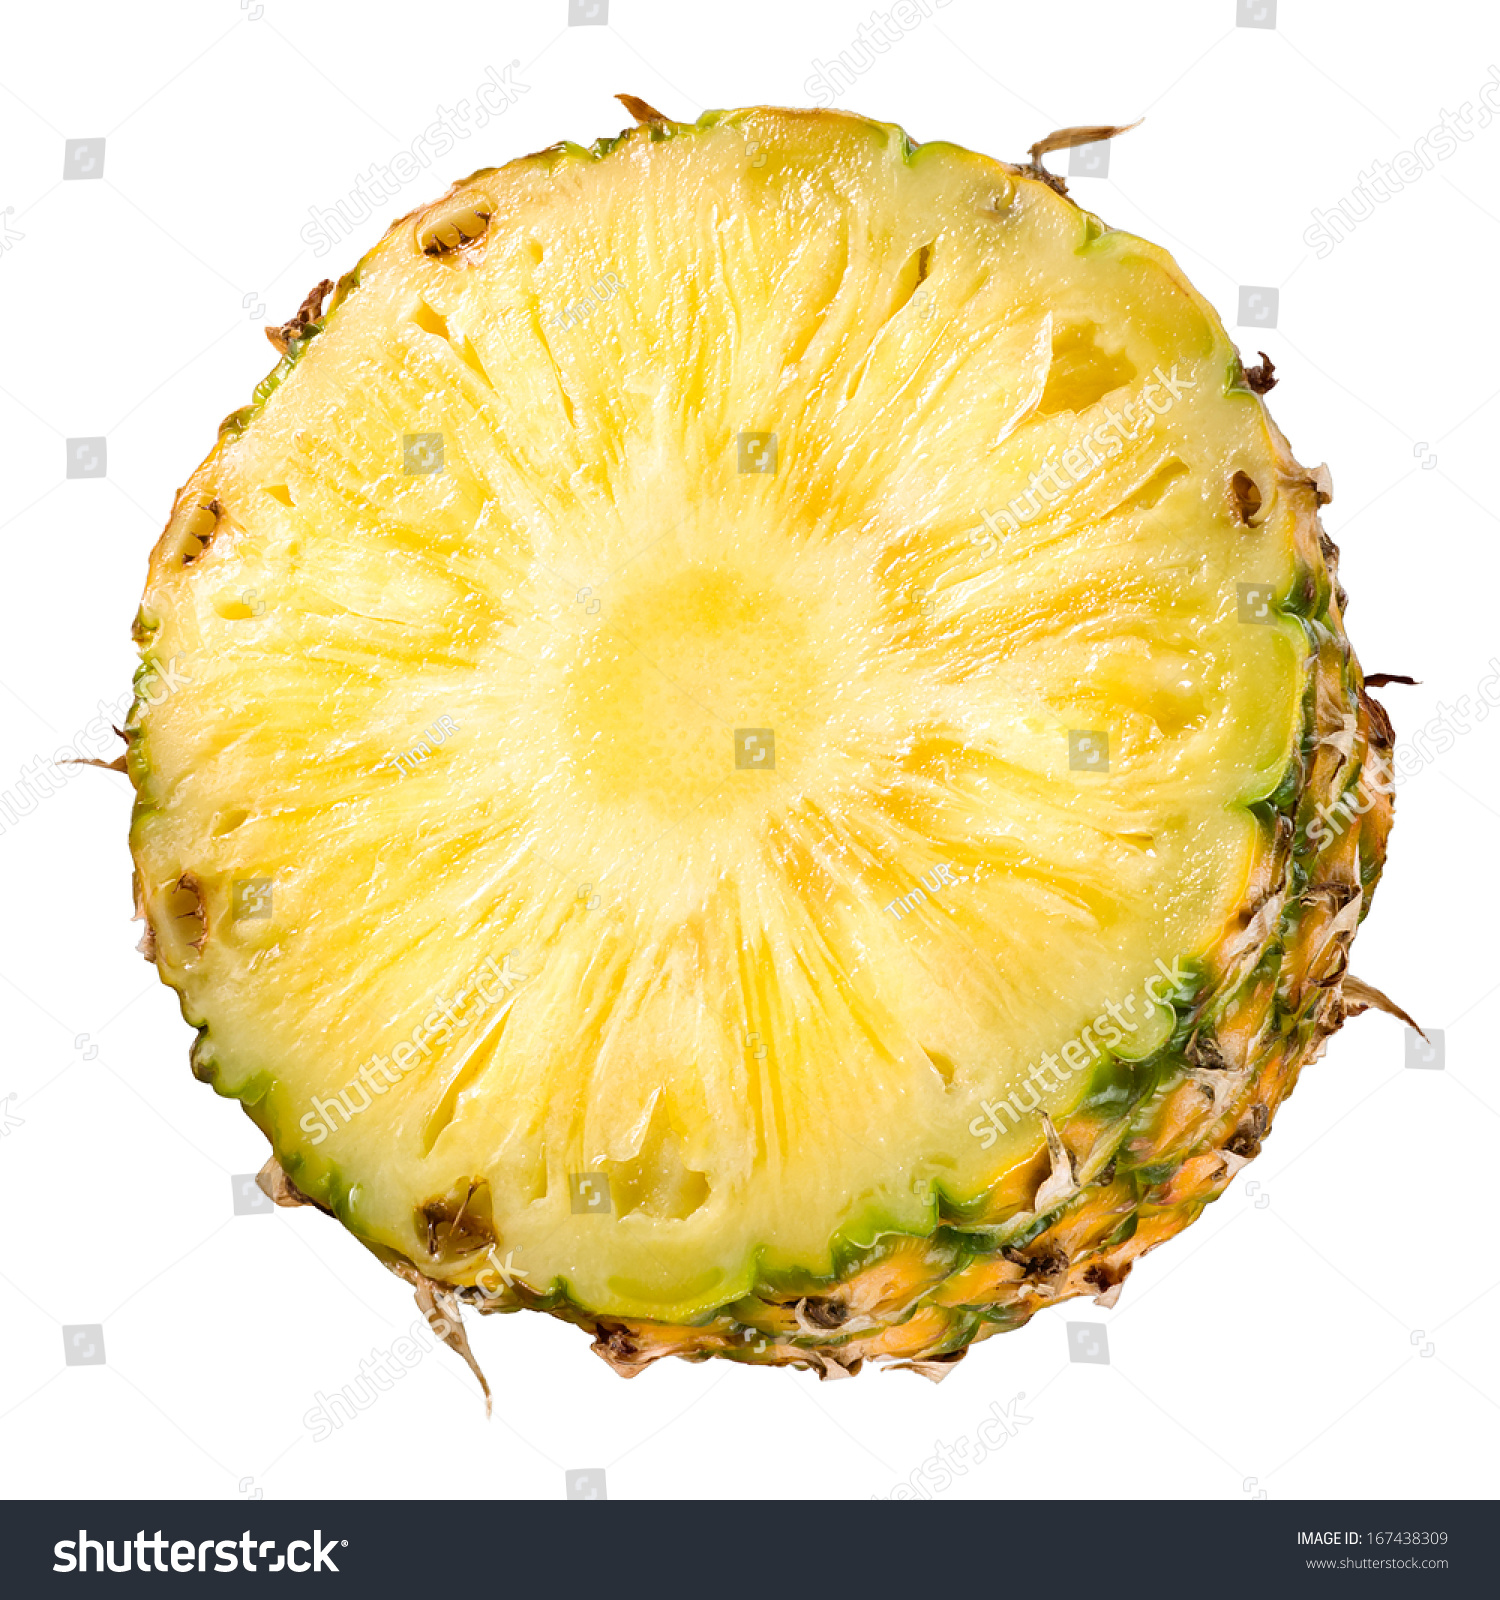 Fresh Sliced Pineapple Half Fruit On Stock Photo 167438309 ...